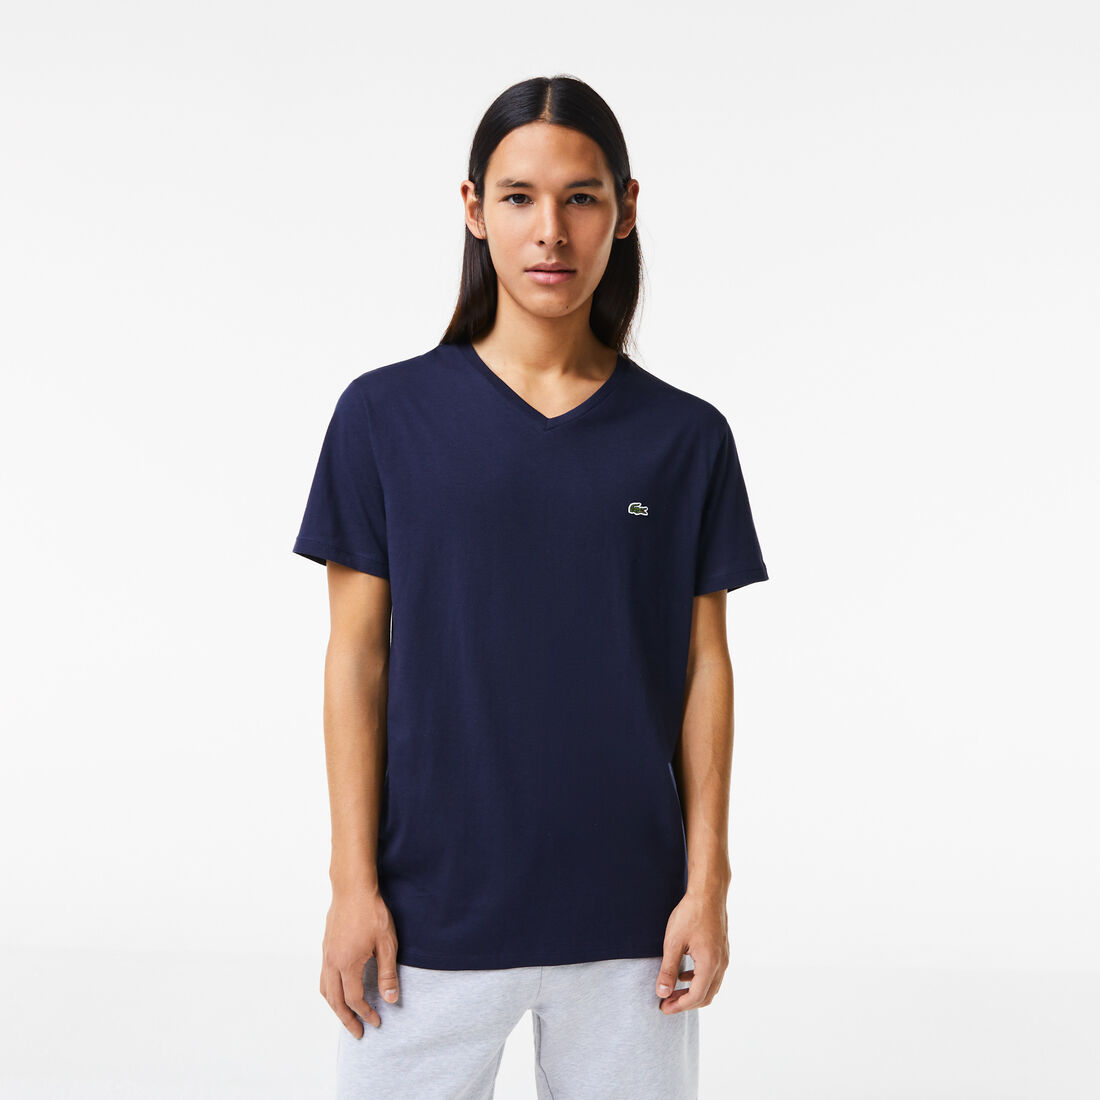 Lacoste V-neck Pima Baumwoll Jersey T-shirts Herren Navy Blau | QBCW-57412